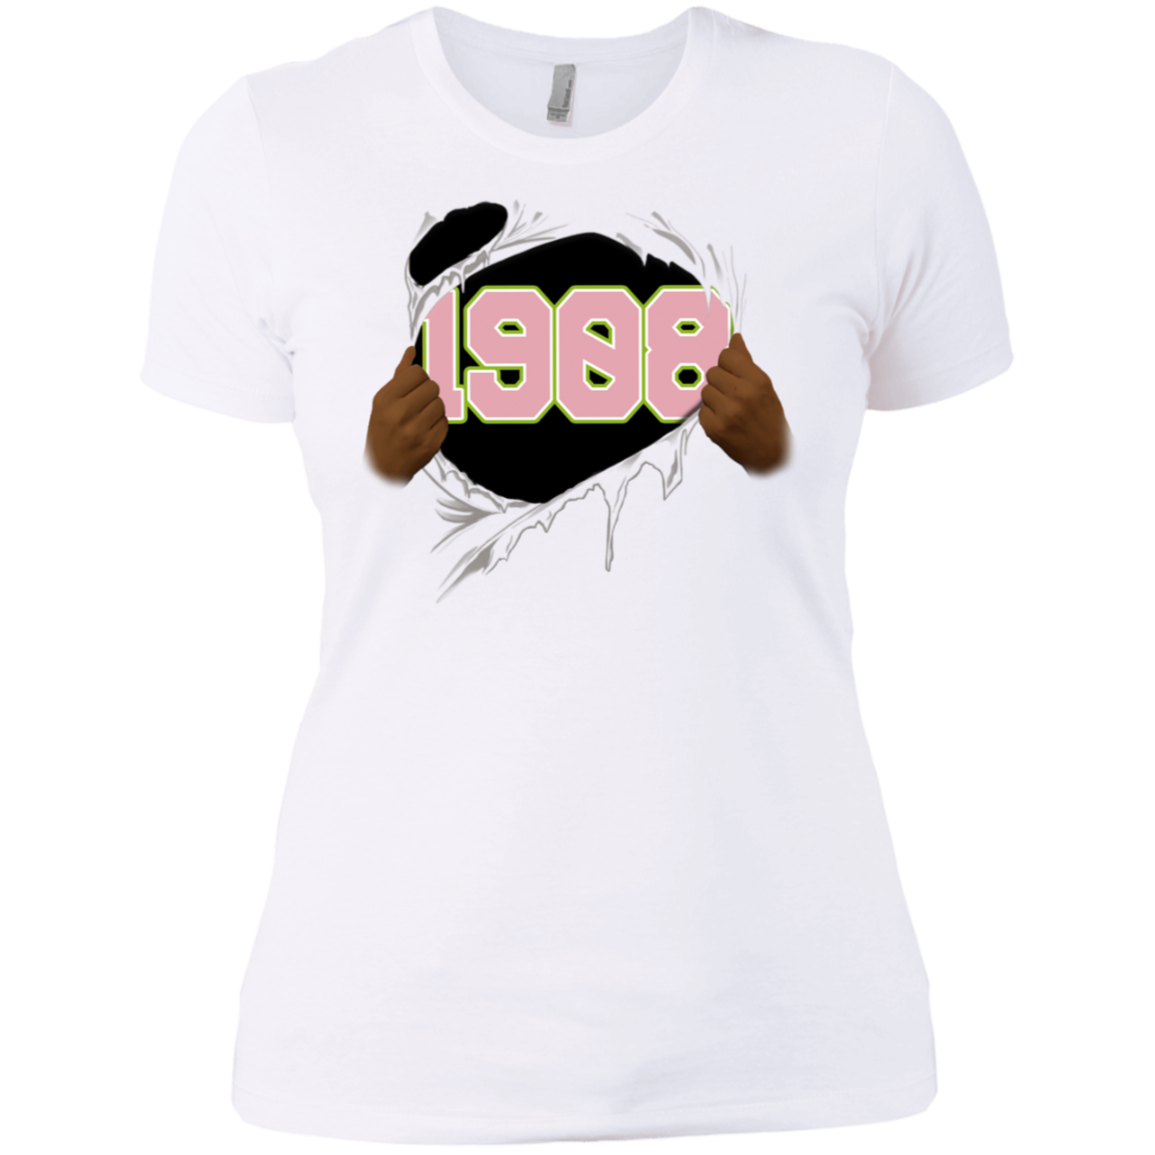 1908 Ripped Boyfriend T-Shirt